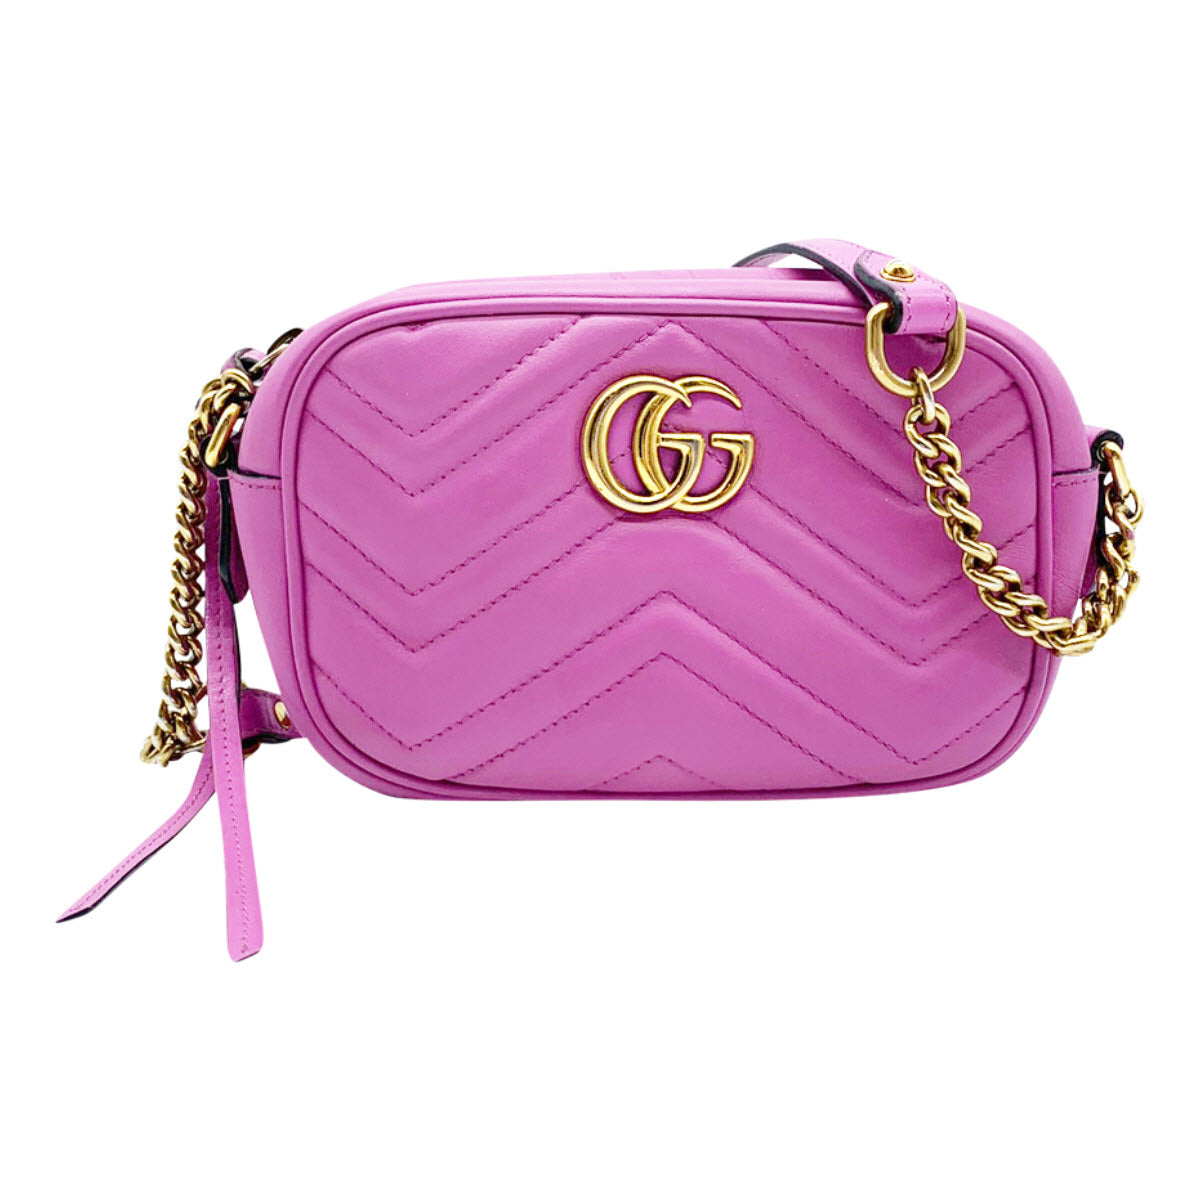 GG Matelassé mini bag in pink leather